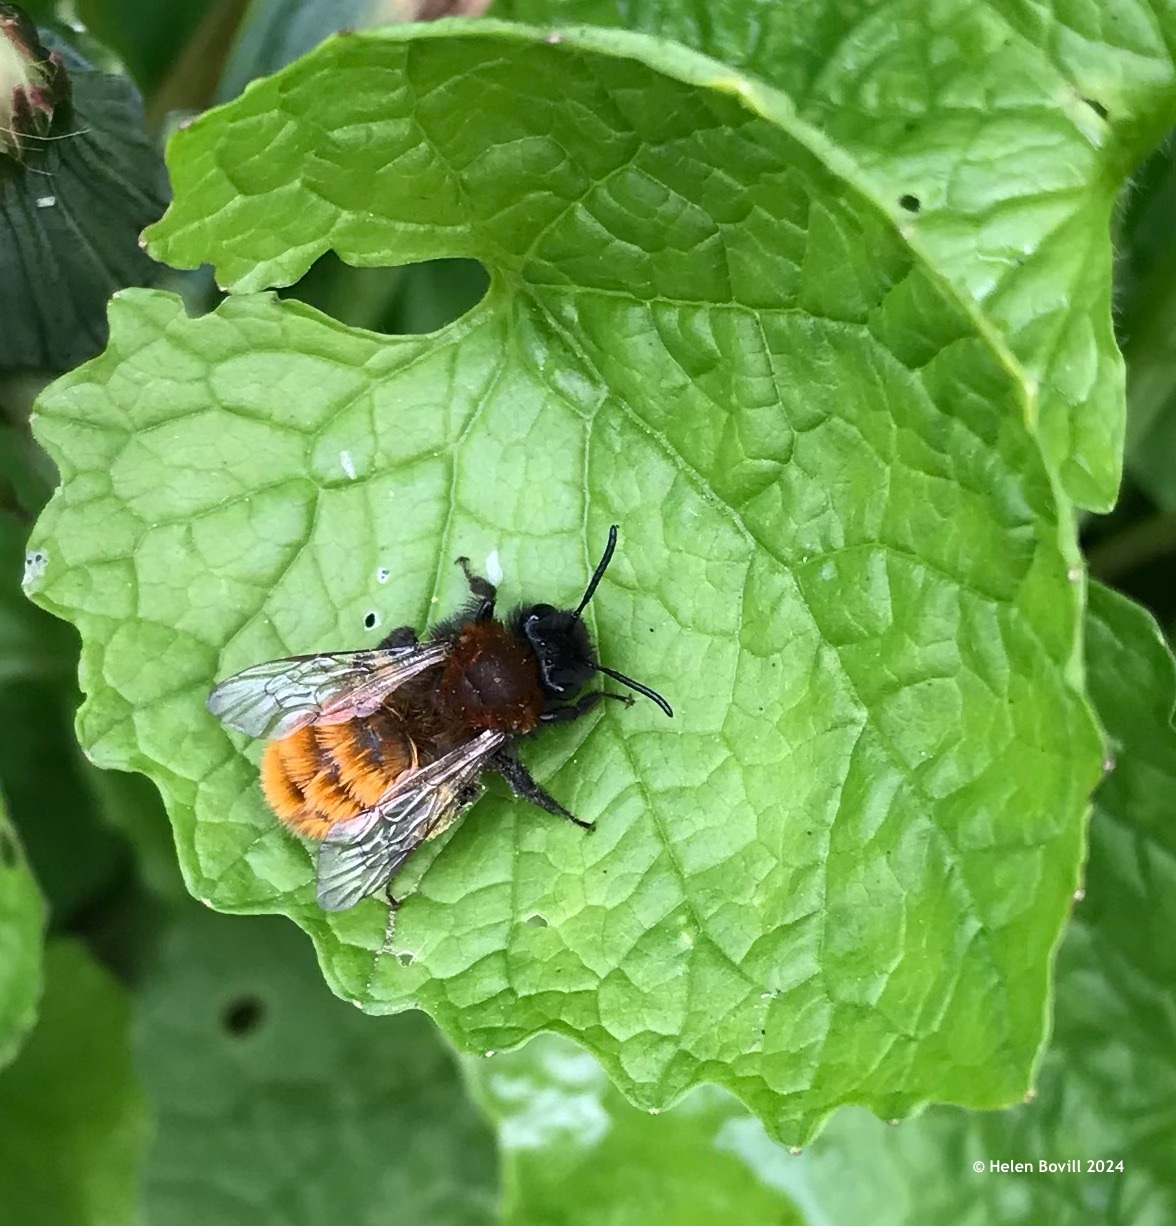 Tawny Mining bee on a leaf